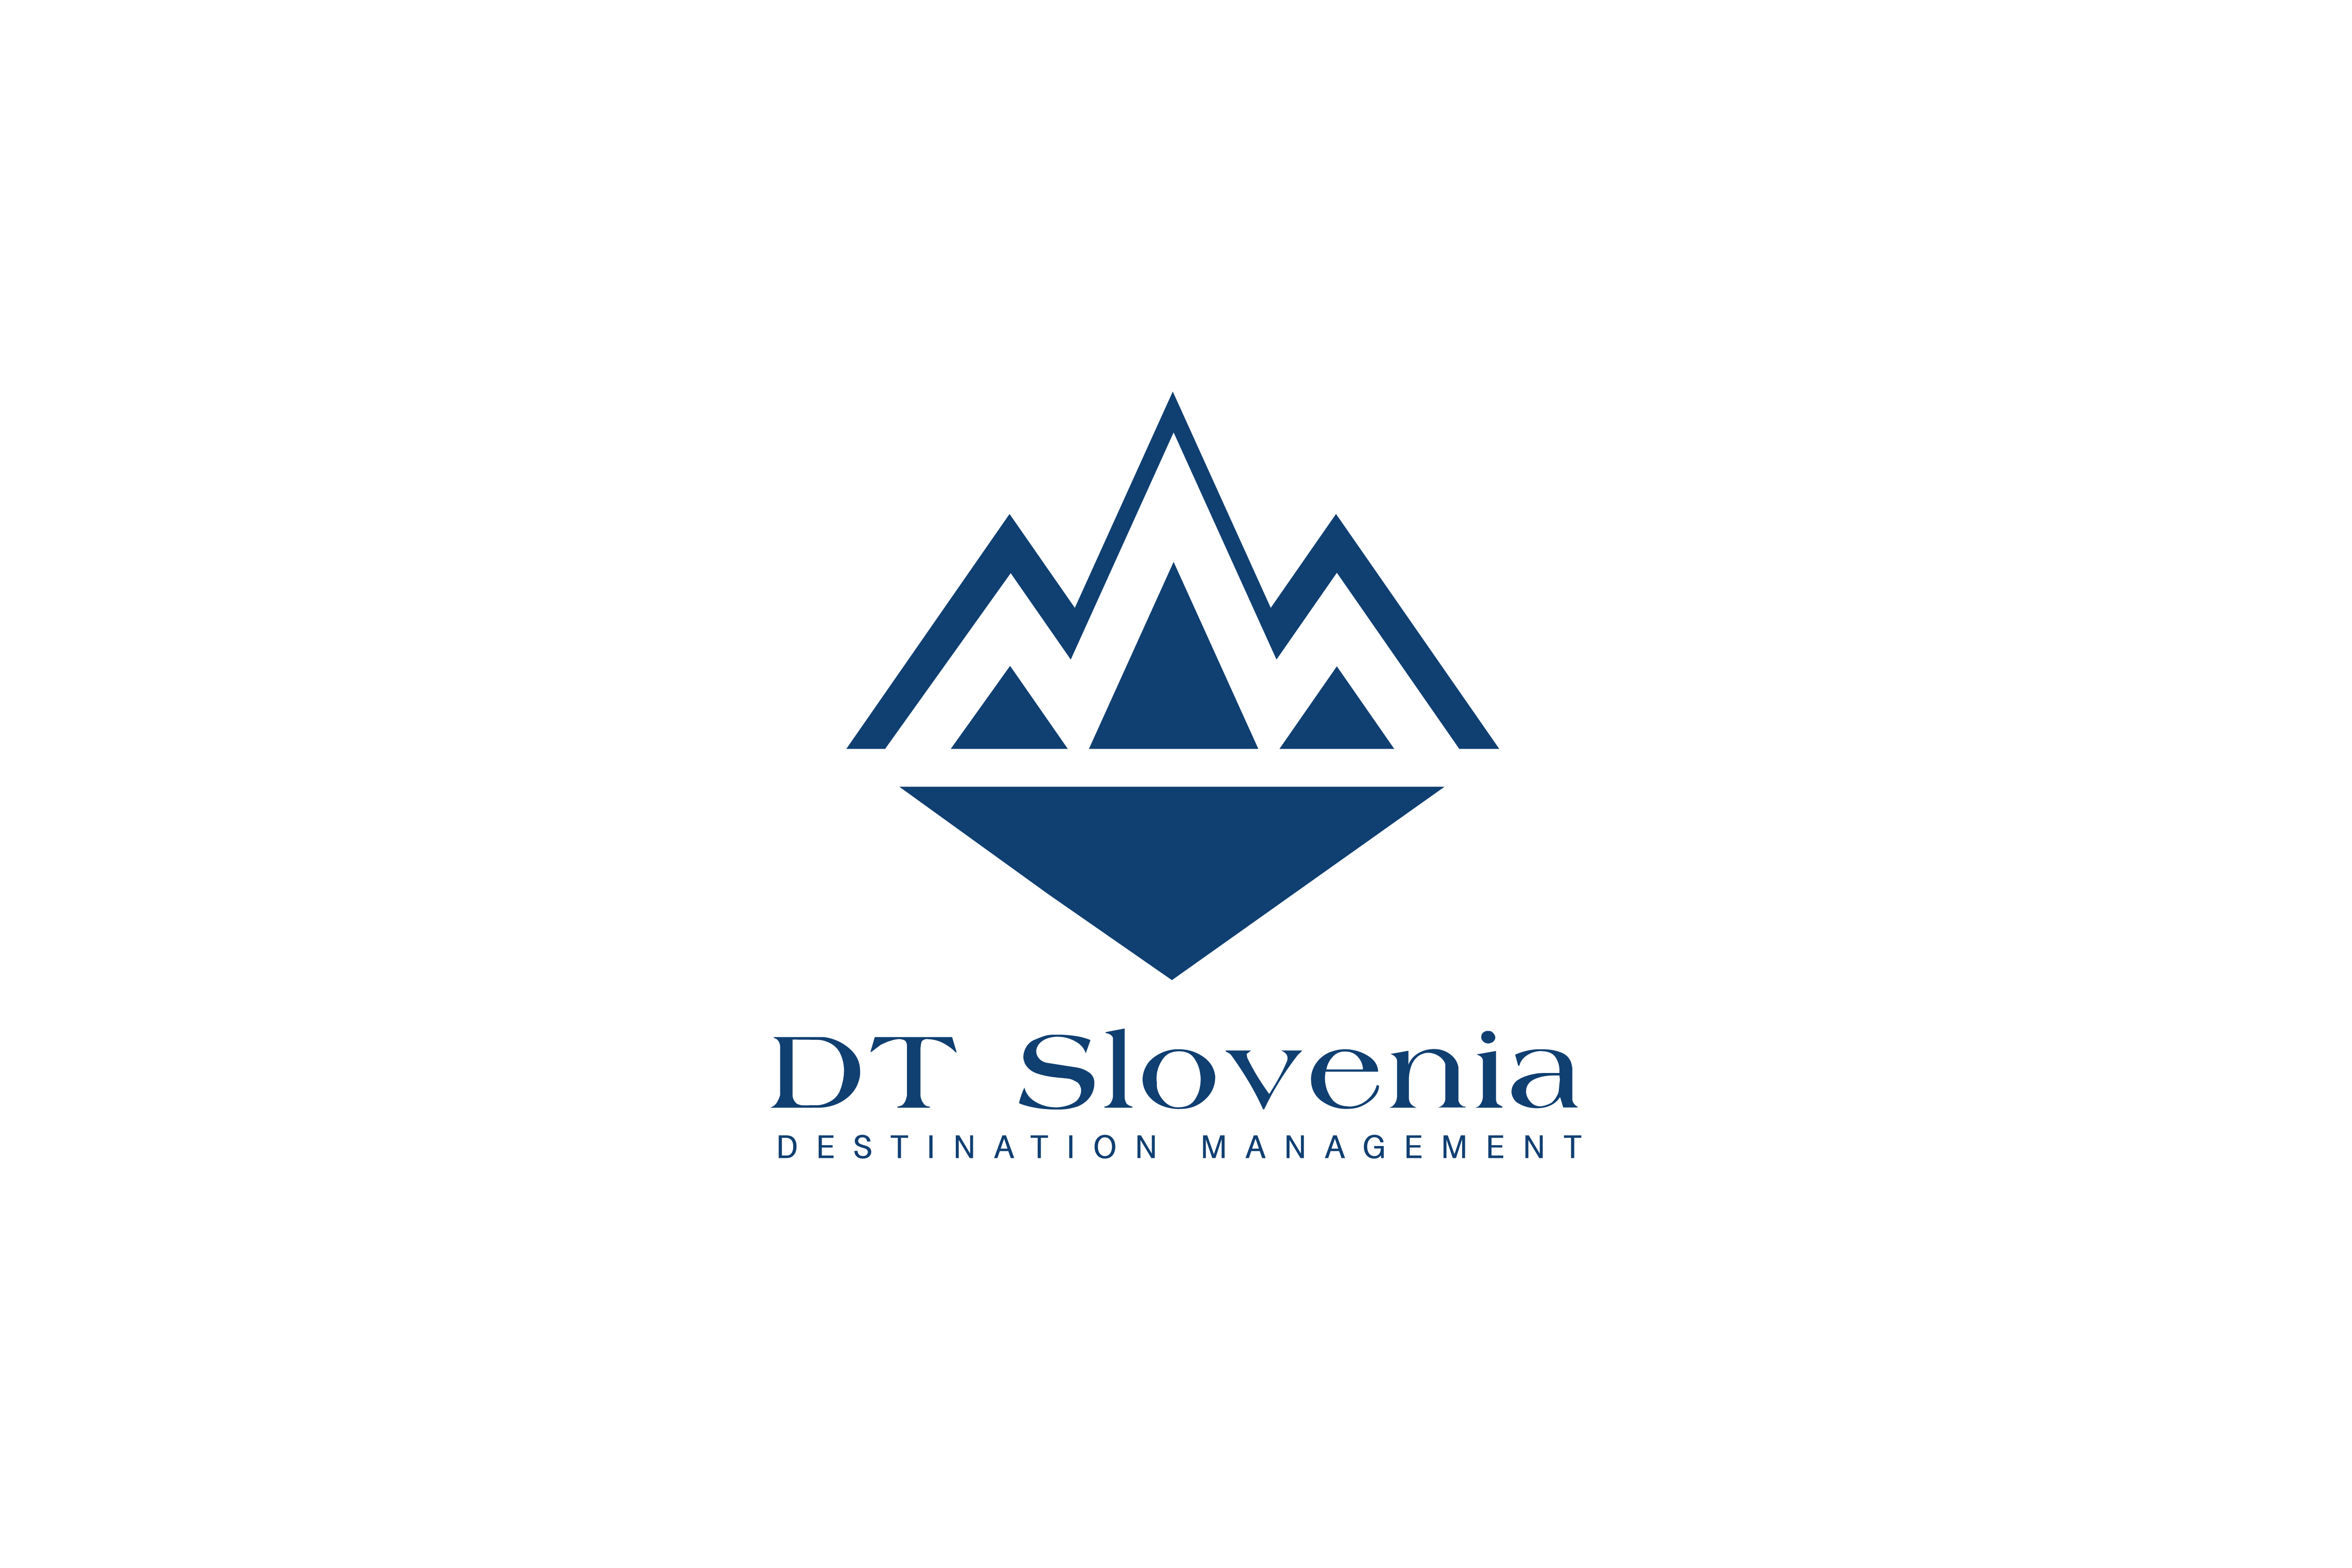 DT Slovenia